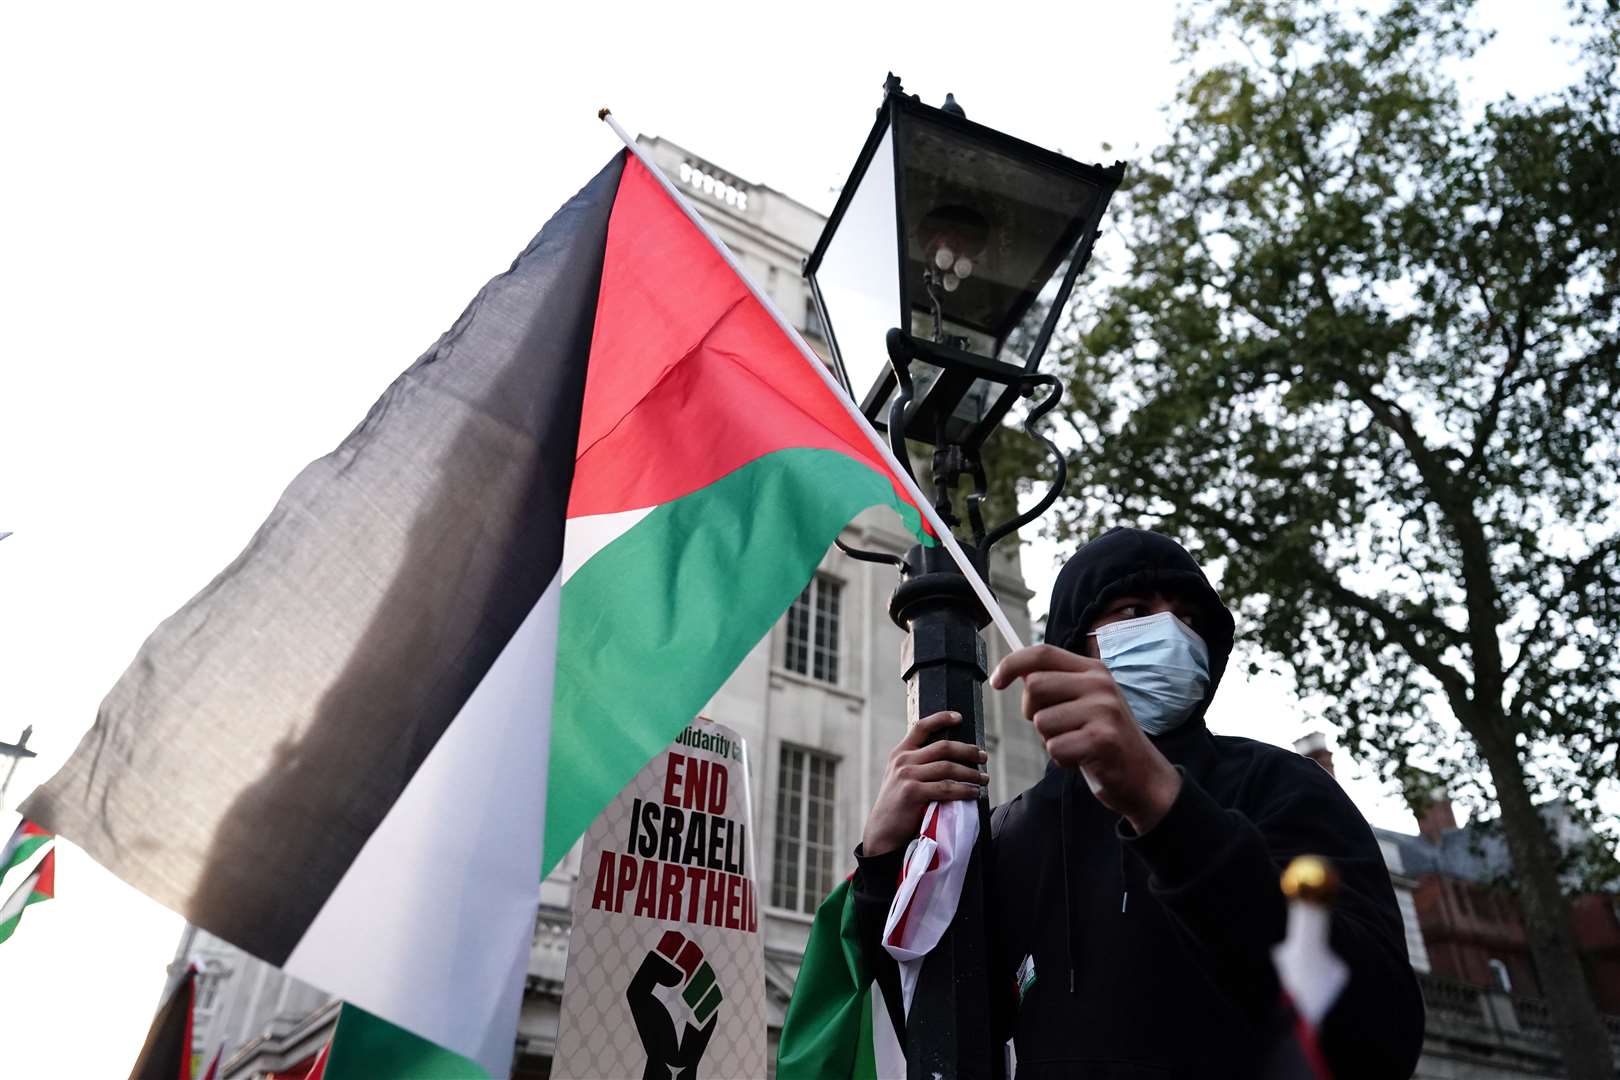 People take part in a Palestine Solidarity Campaign demonstration near the Israeli Embassy in London (Jordan Pettitt/PA)